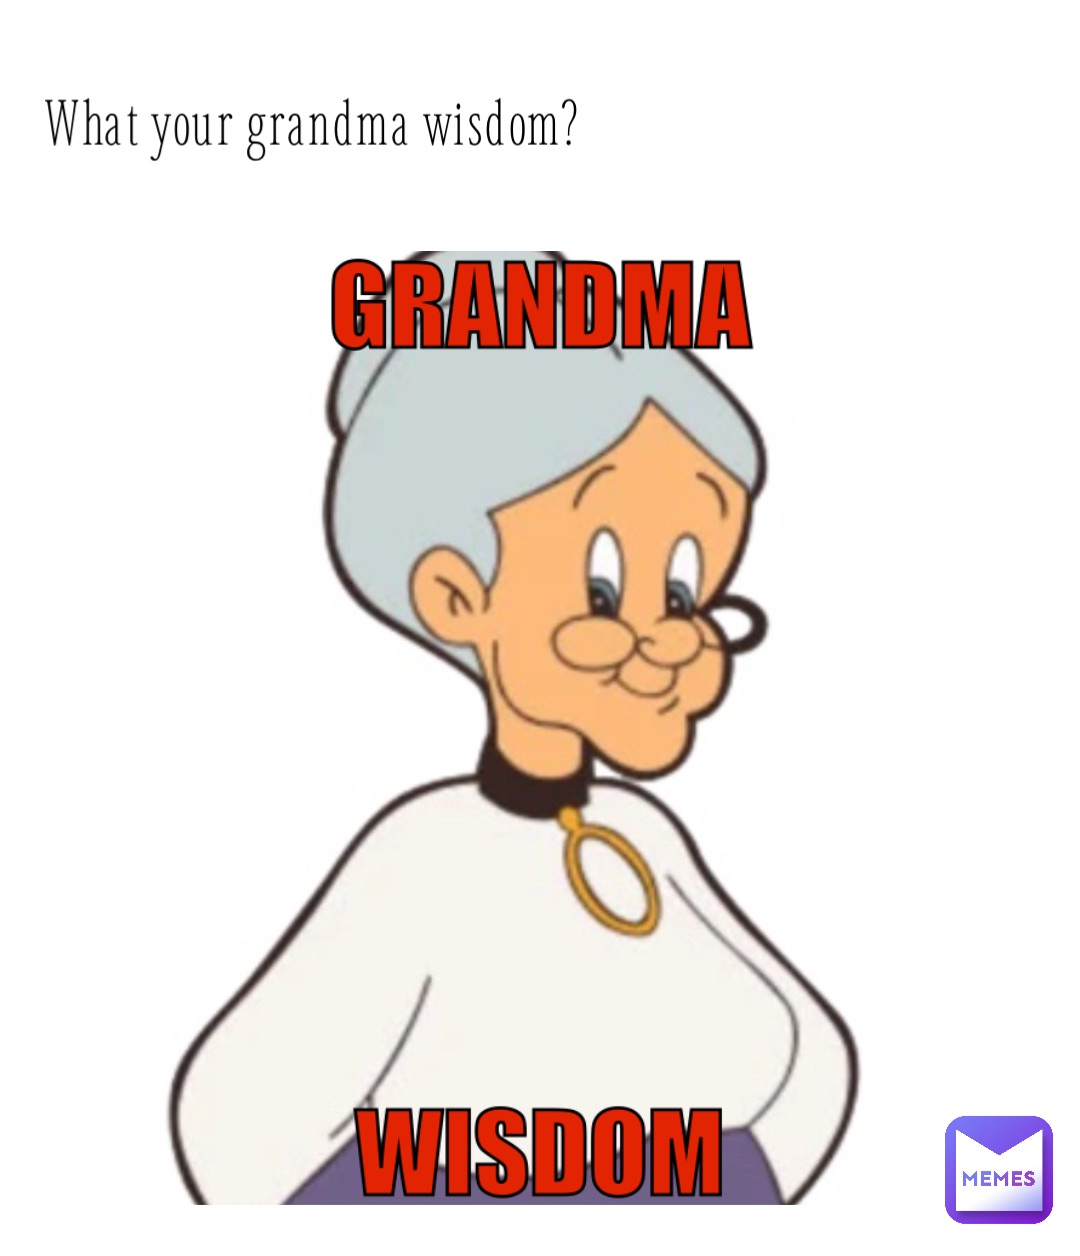 What your grandma wisdom?